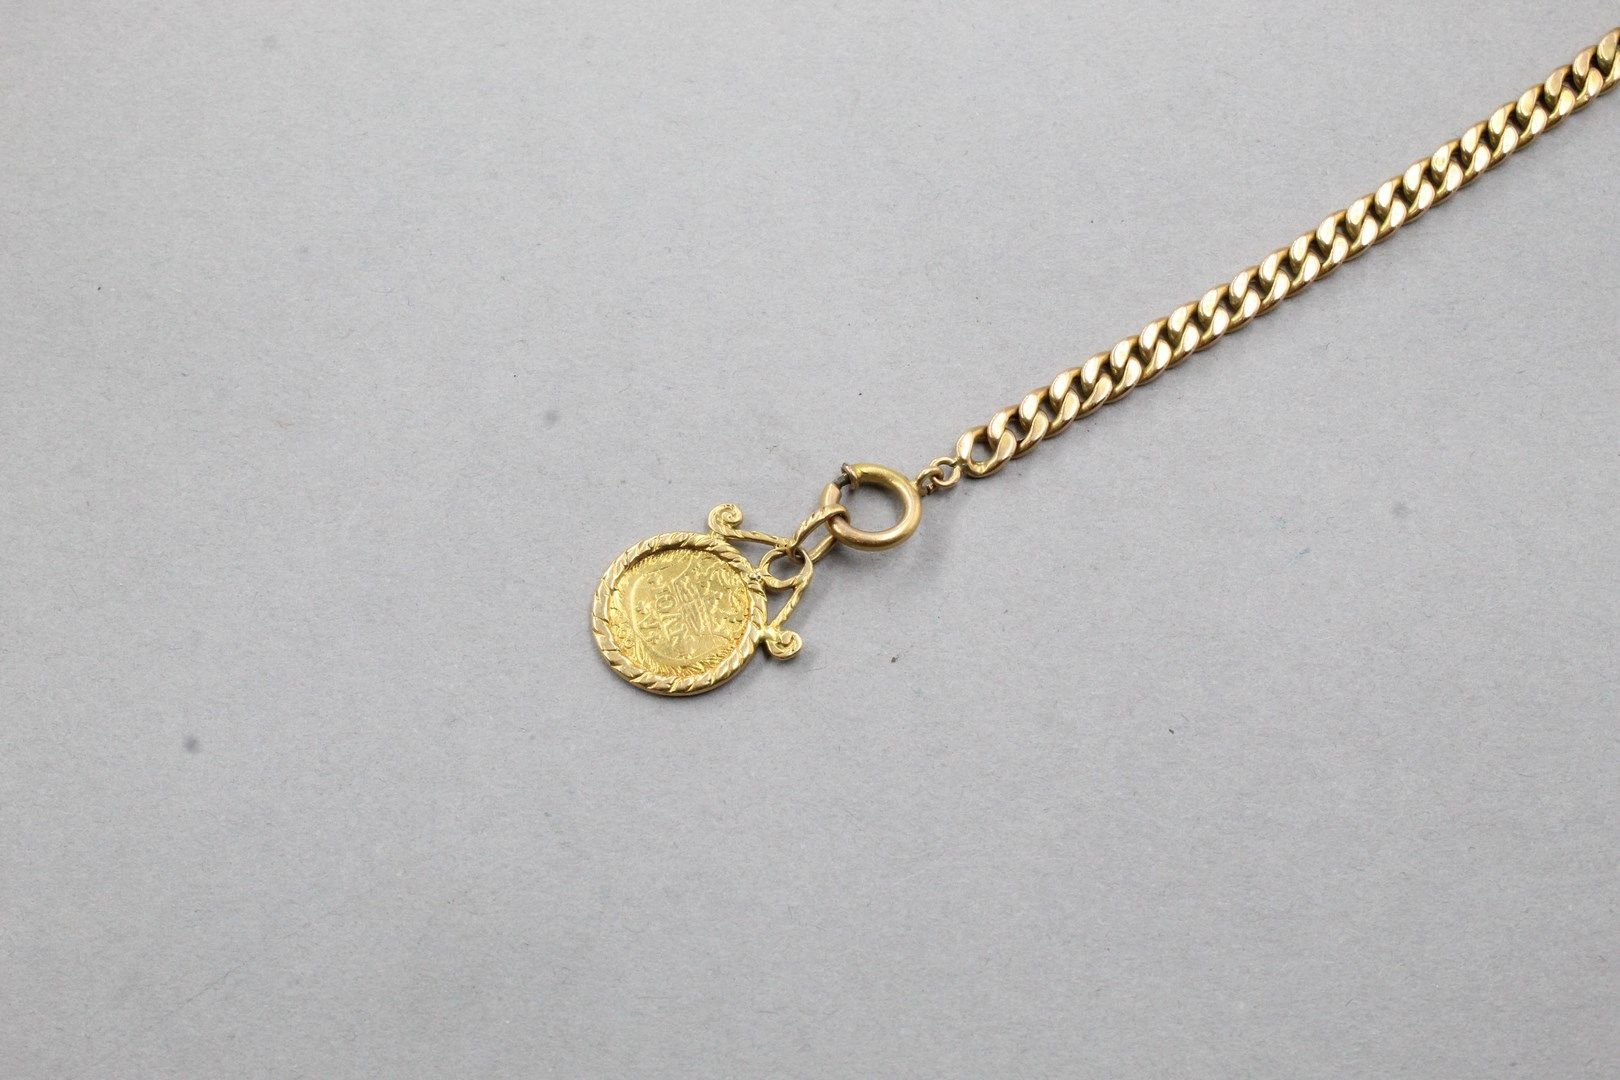 Null 18K(750)玫瑰金手链，带有一枚小金币。

手腕尺寸：约19.5厘米 - 重量：7.70克。